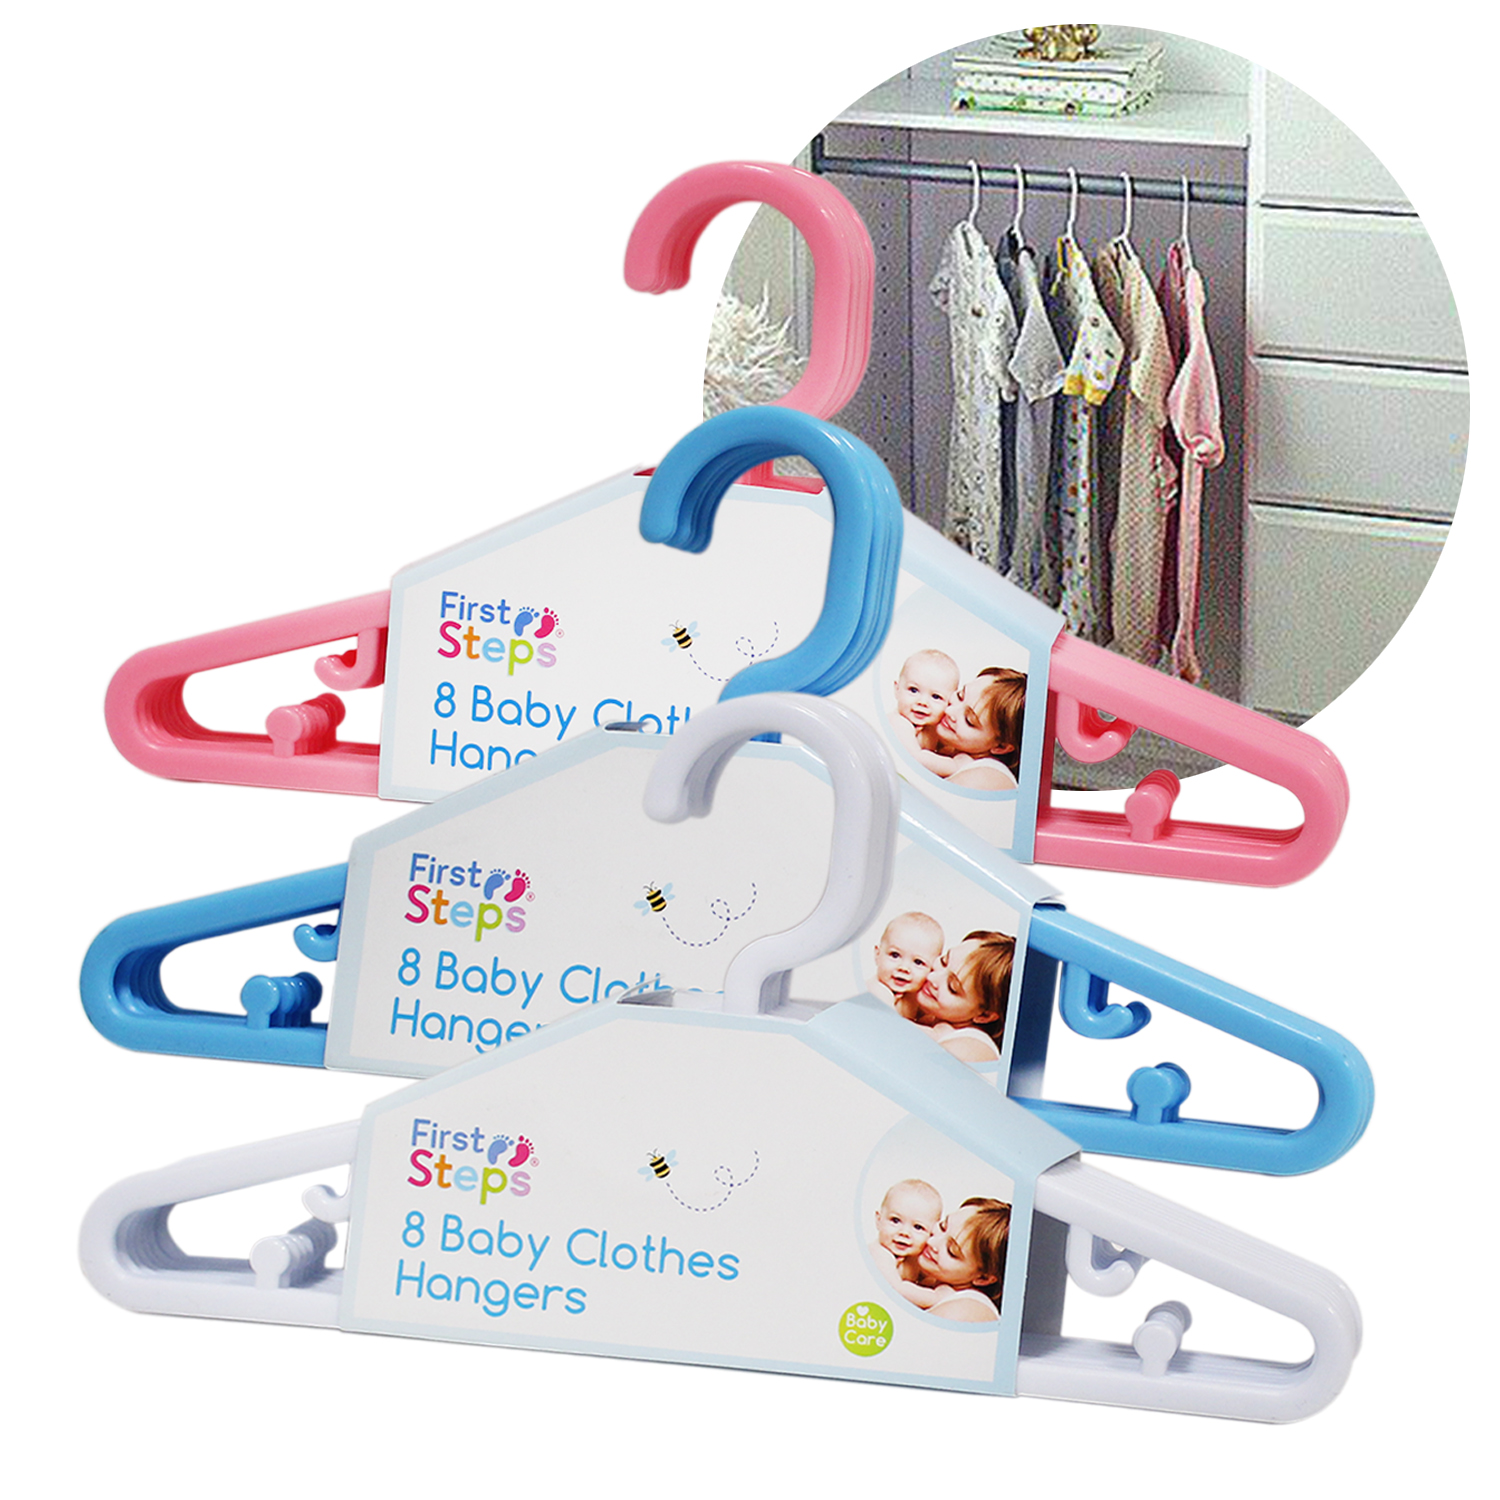 Childrens plastic hangers